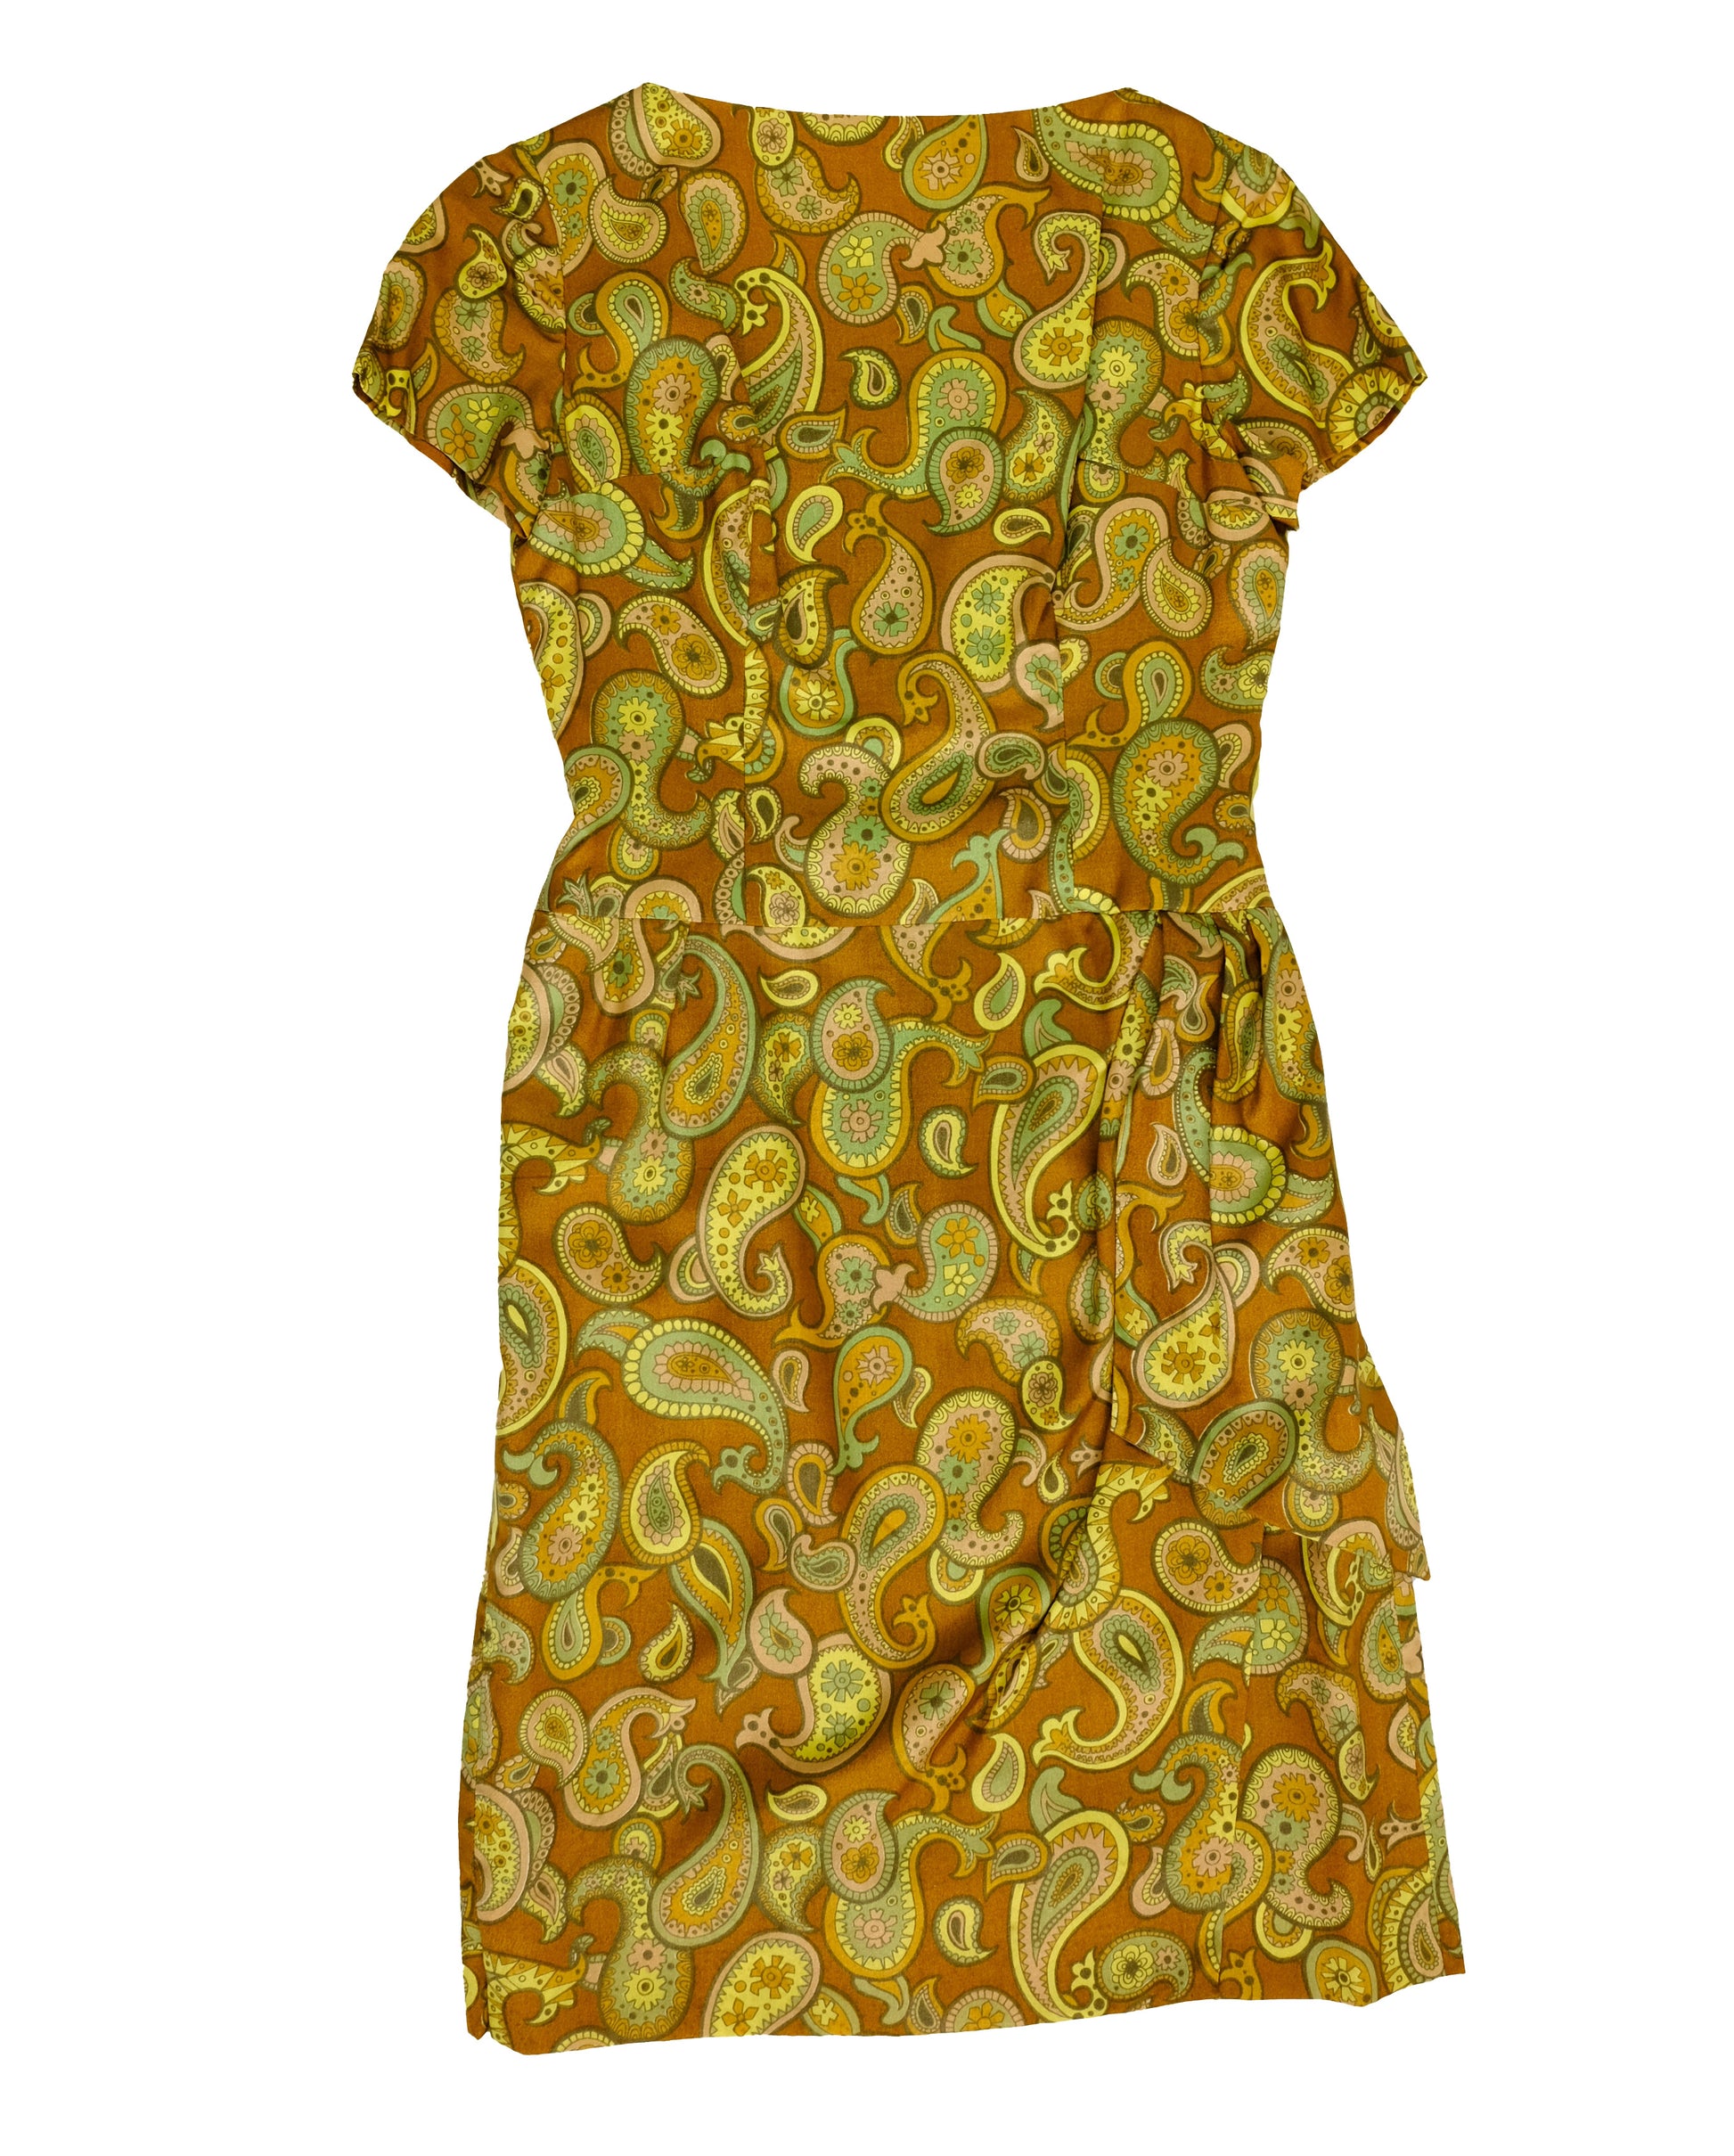 Donald Dunton 1960s Vintage Sheath Dress in Paisley Silk, UK10